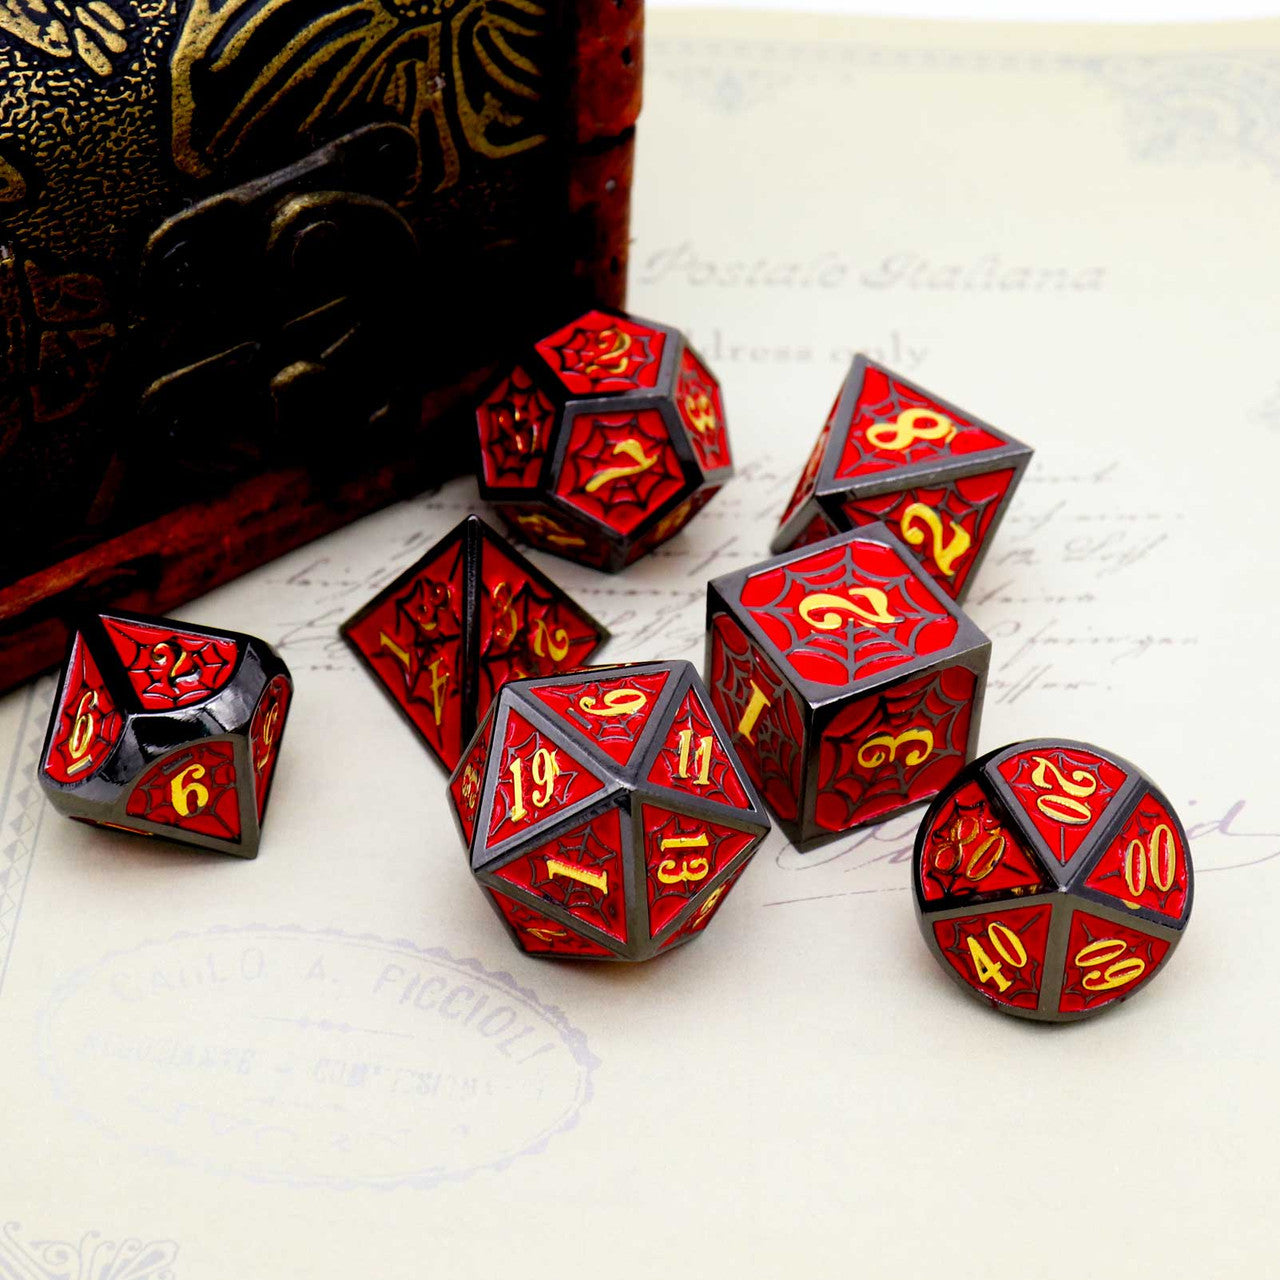 black red dice, metal dice, black metal dice, red metal dice, net dice